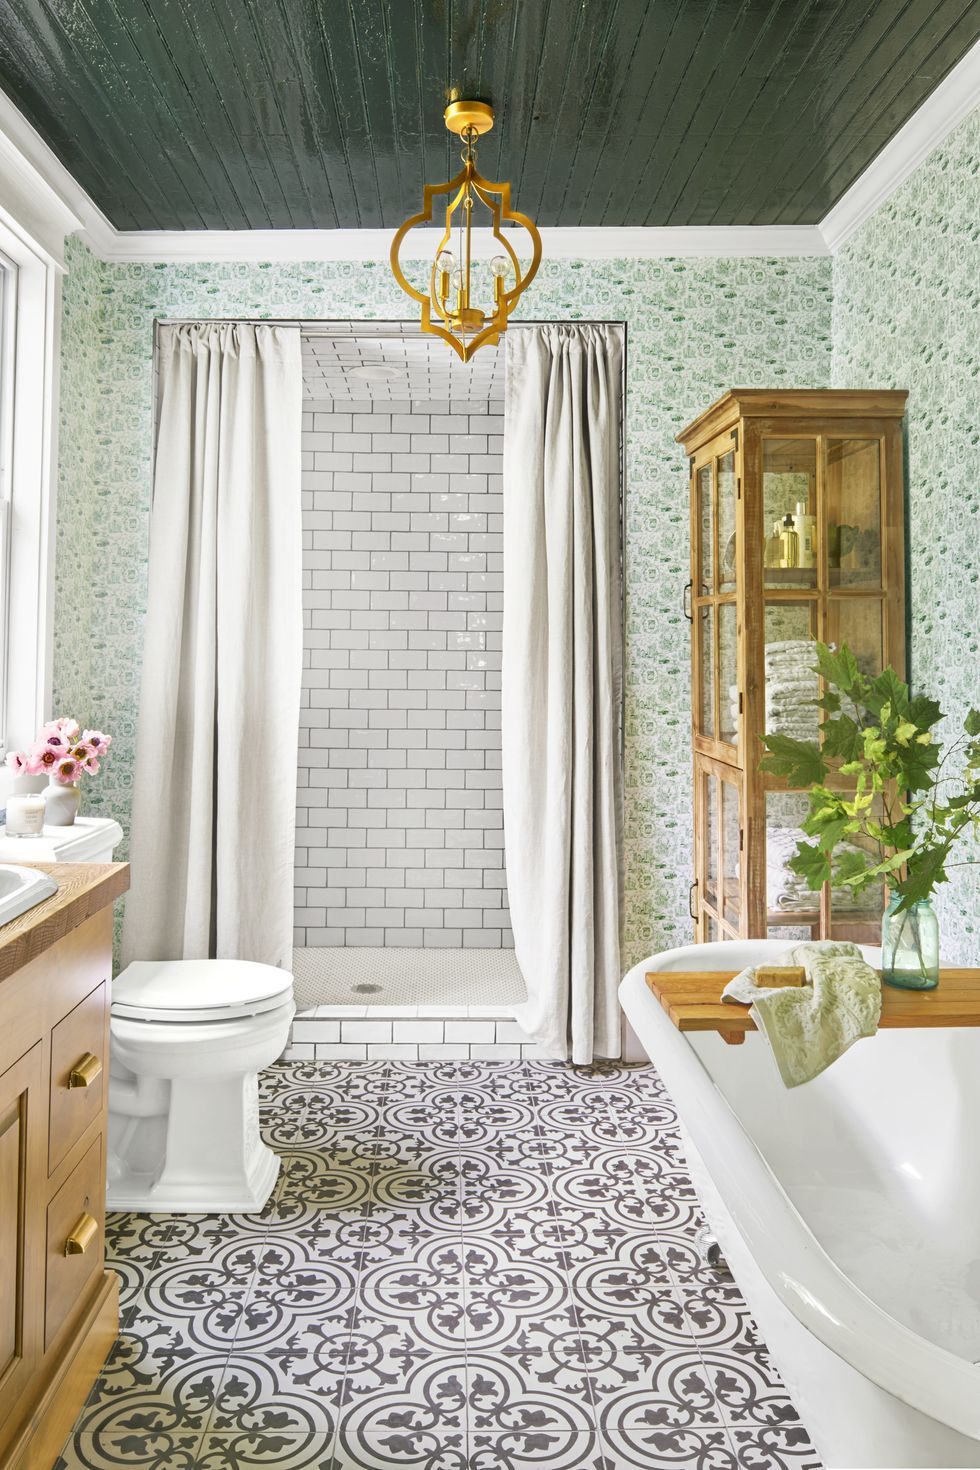 20 Popular Bathroom Tile Ideas Bathroom Wall And Floor Tiles